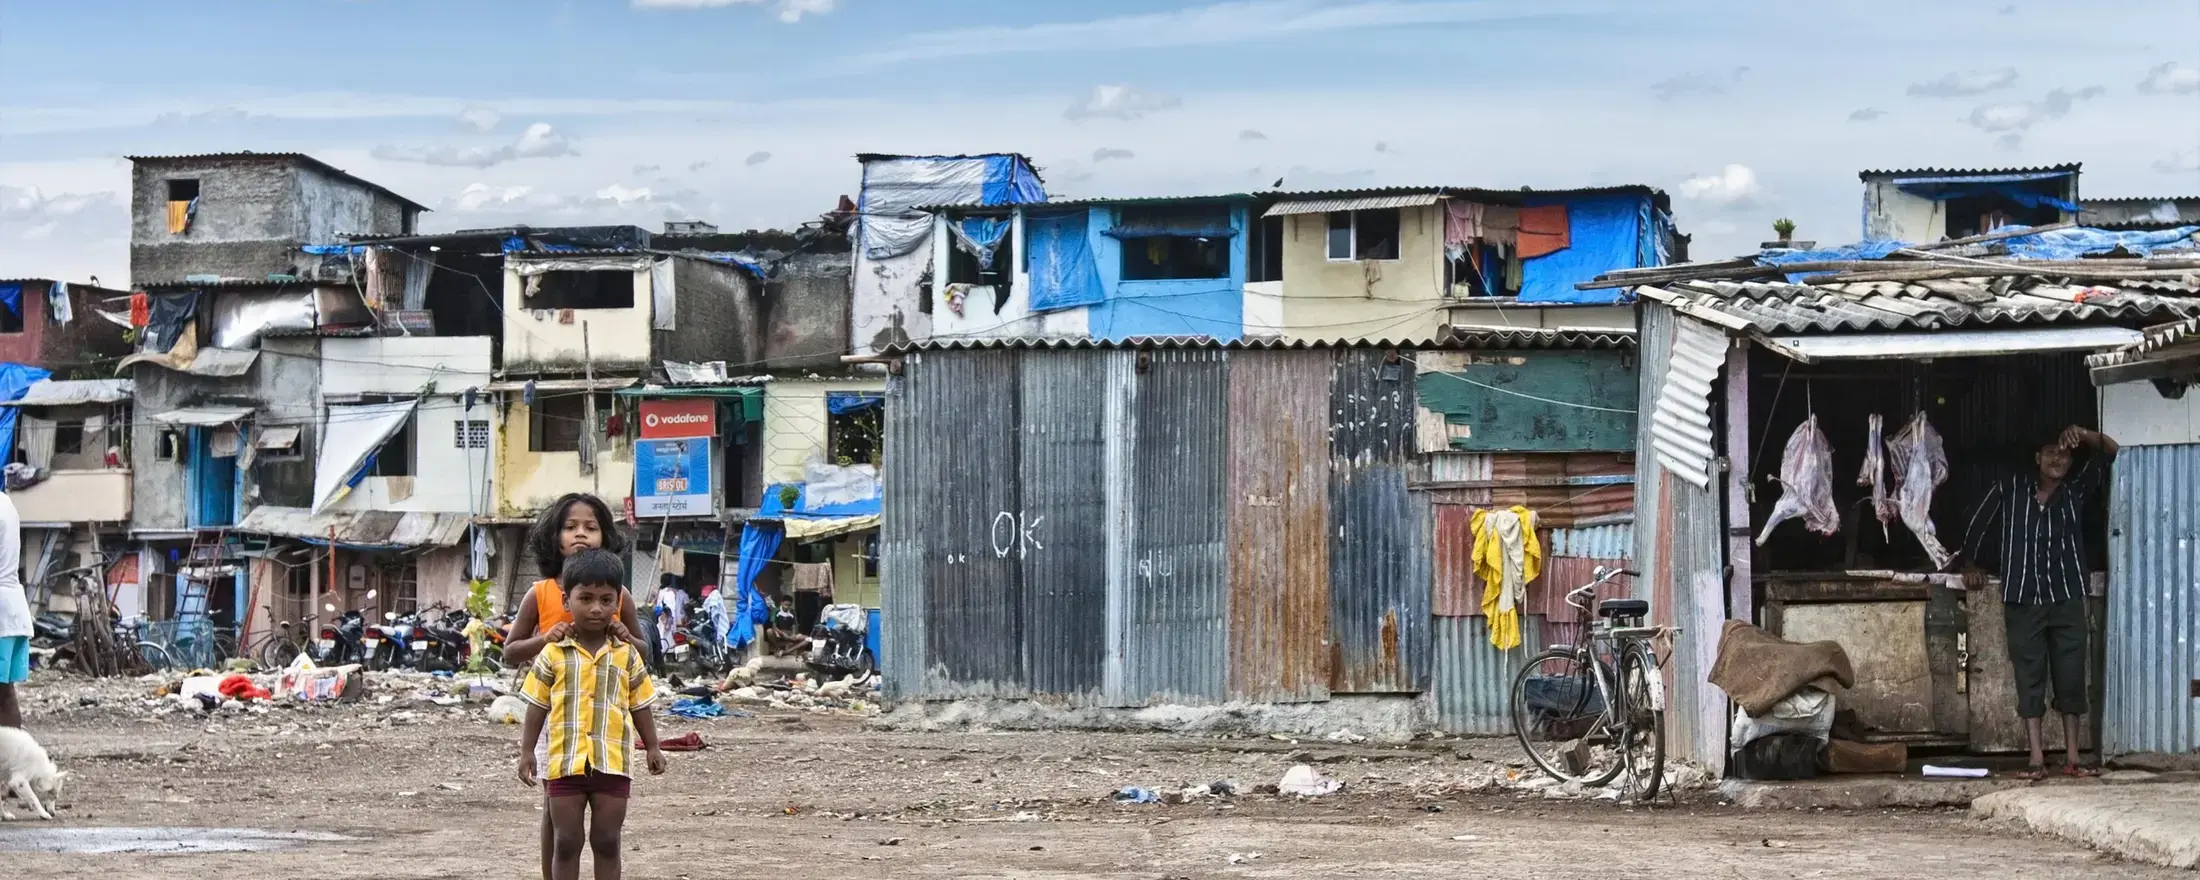 Two children standing in front of slum houses.